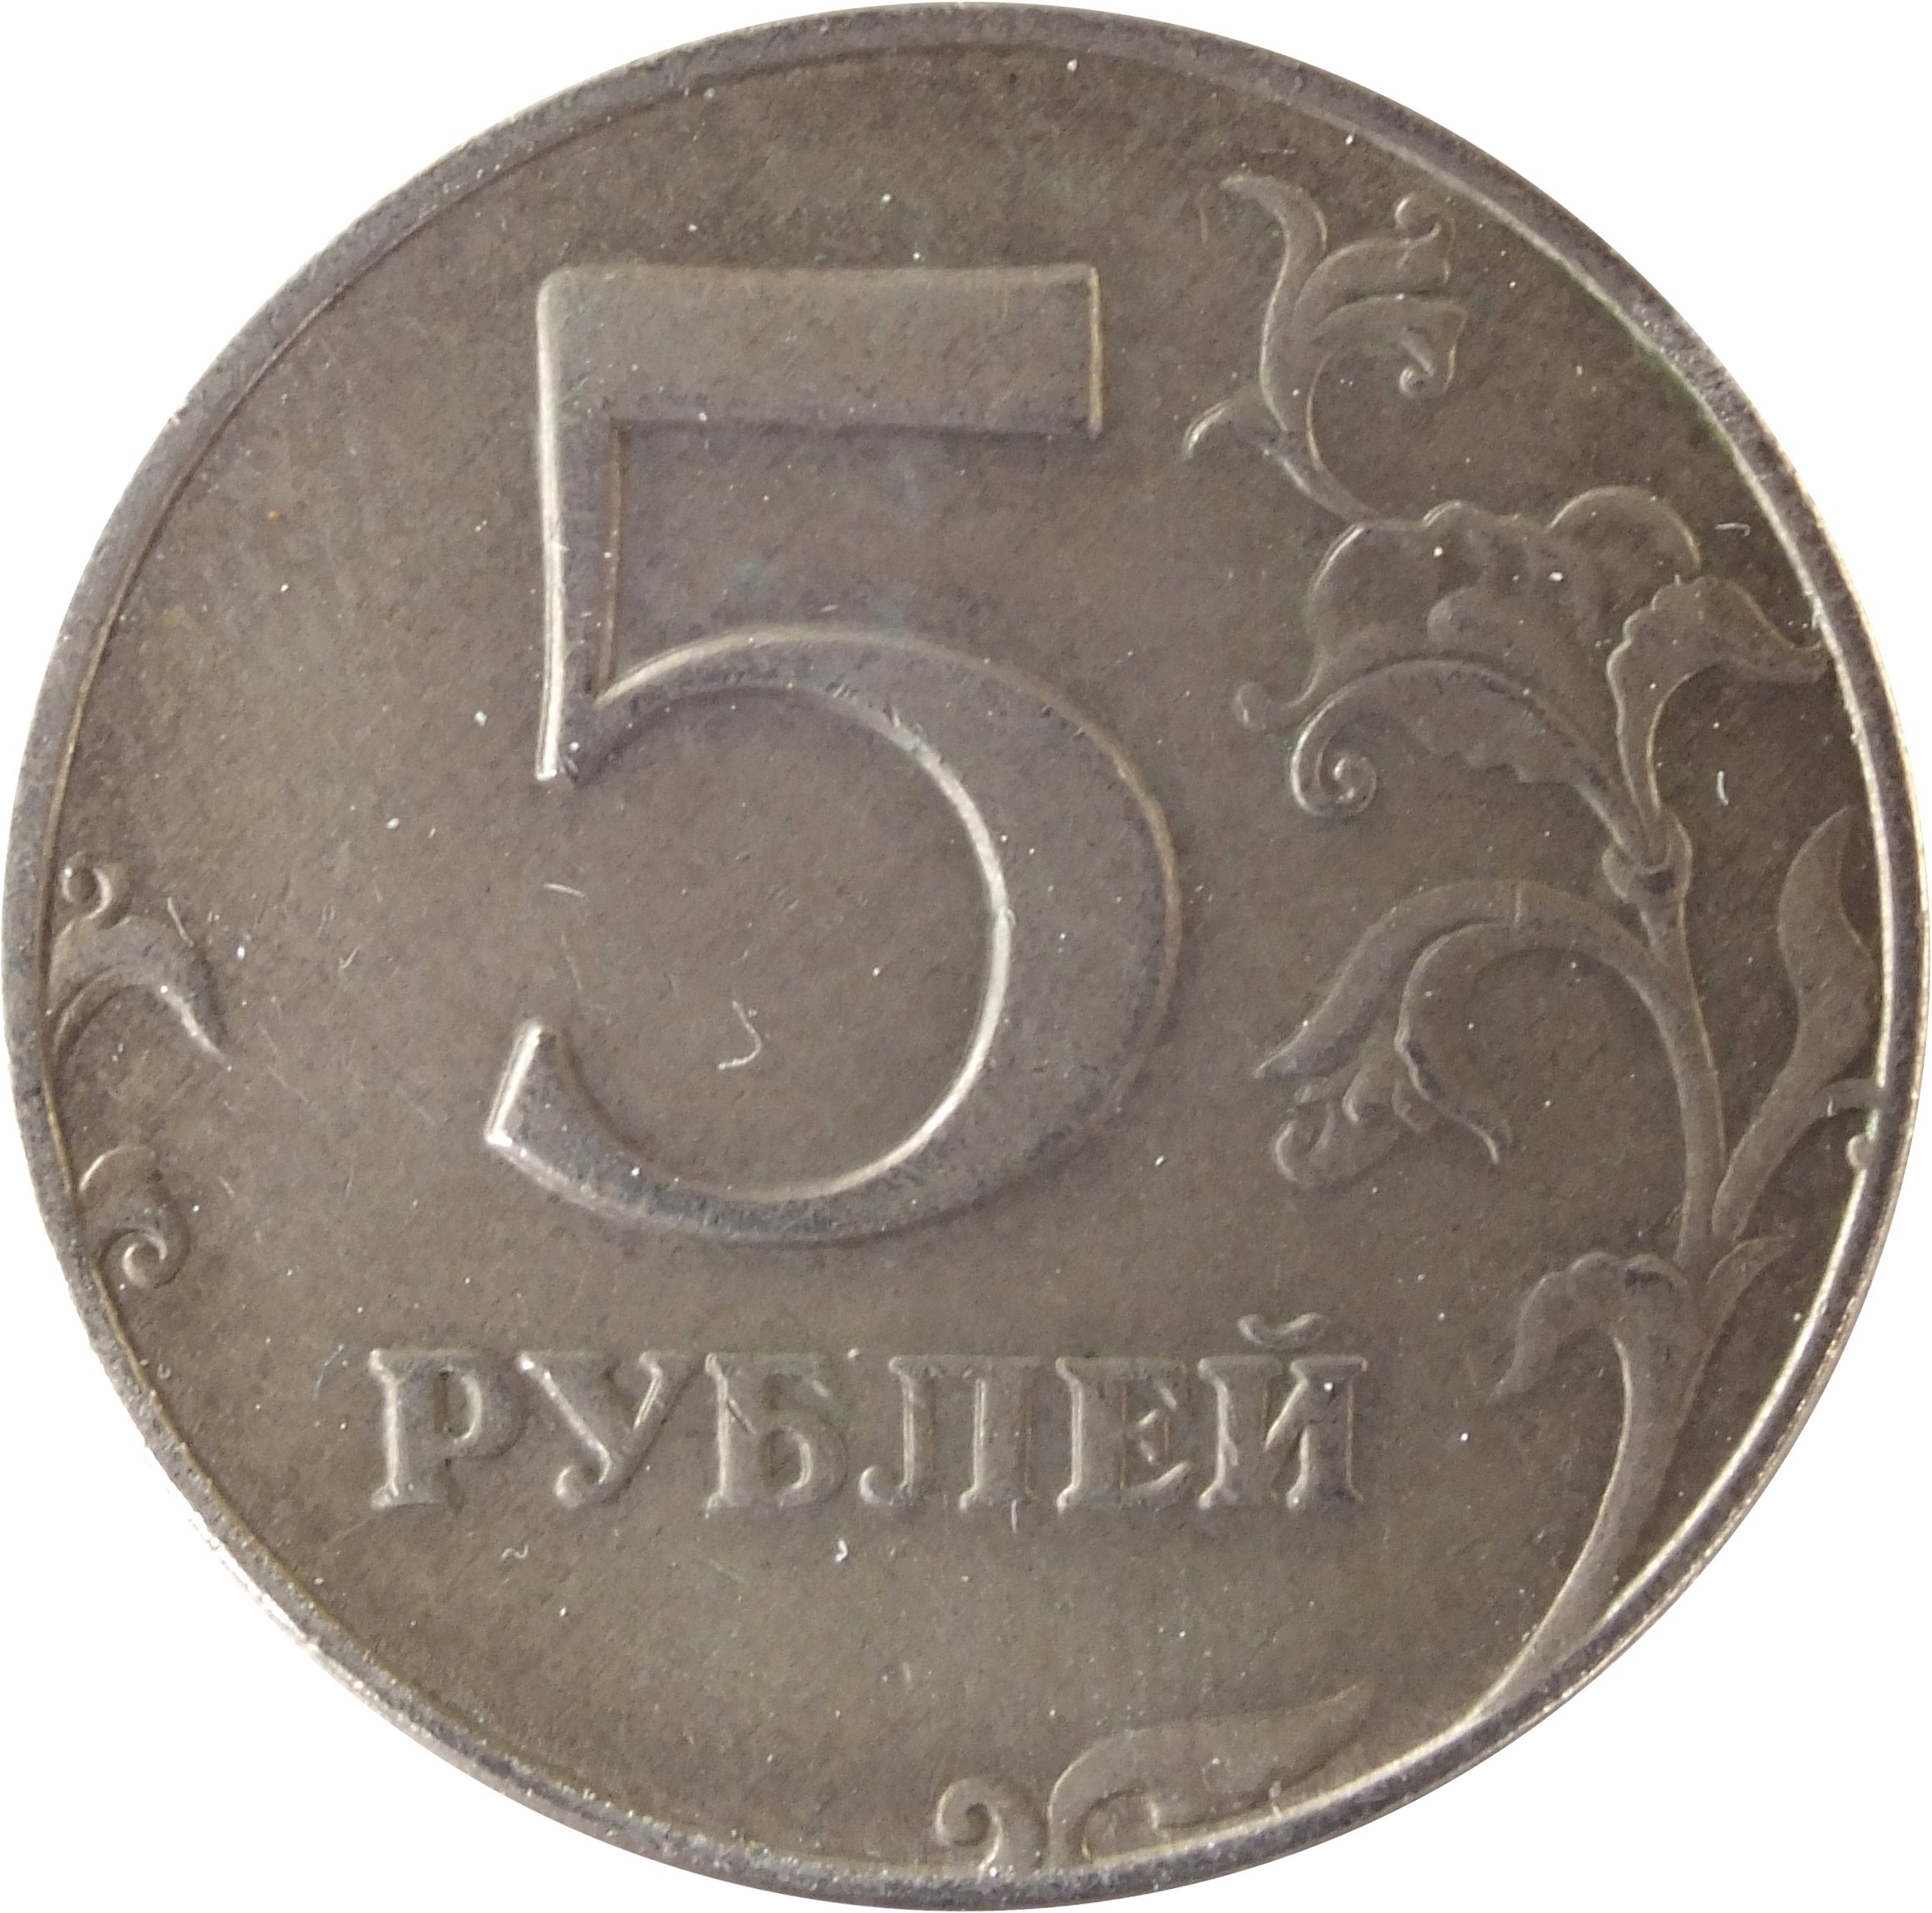 5 рублей вернули. Монета 5 рублей. Монета 5 рублей реверс. Монета "5 рублей 1907 года". Монета 5 рублей без фона.